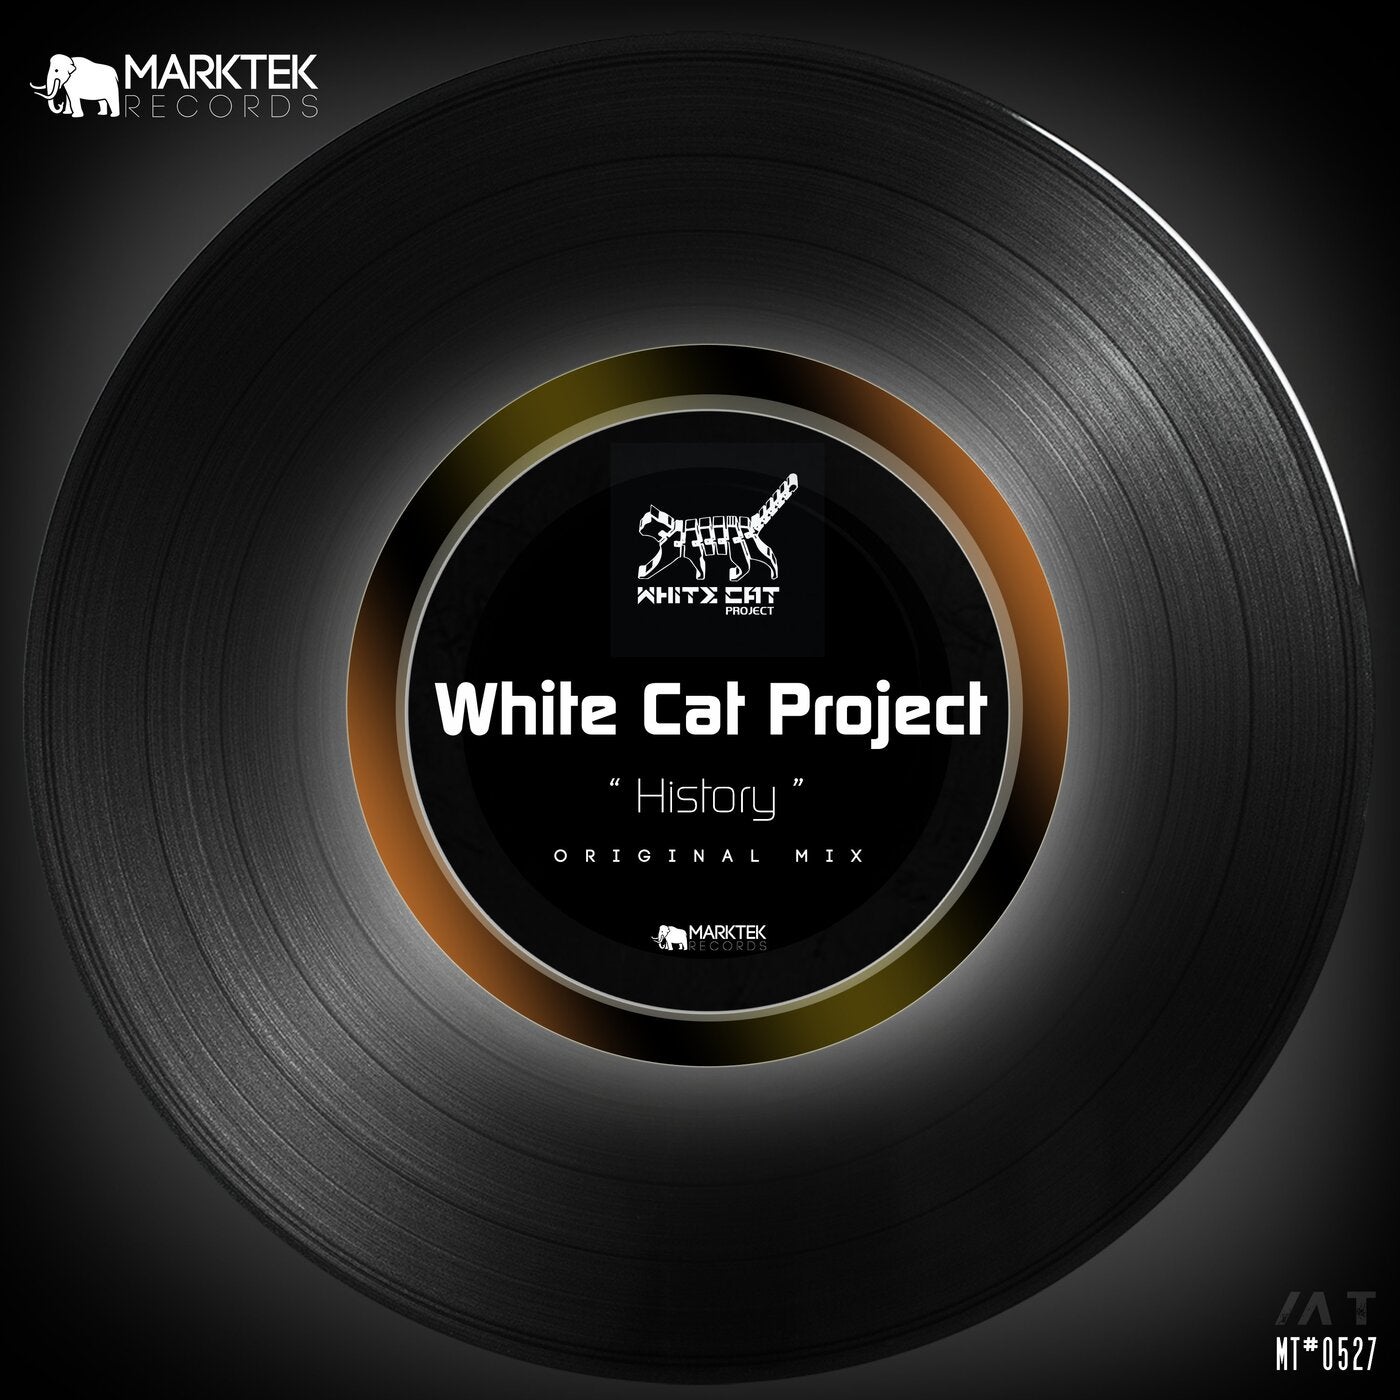 White Cat Project - History [Marktek Records]